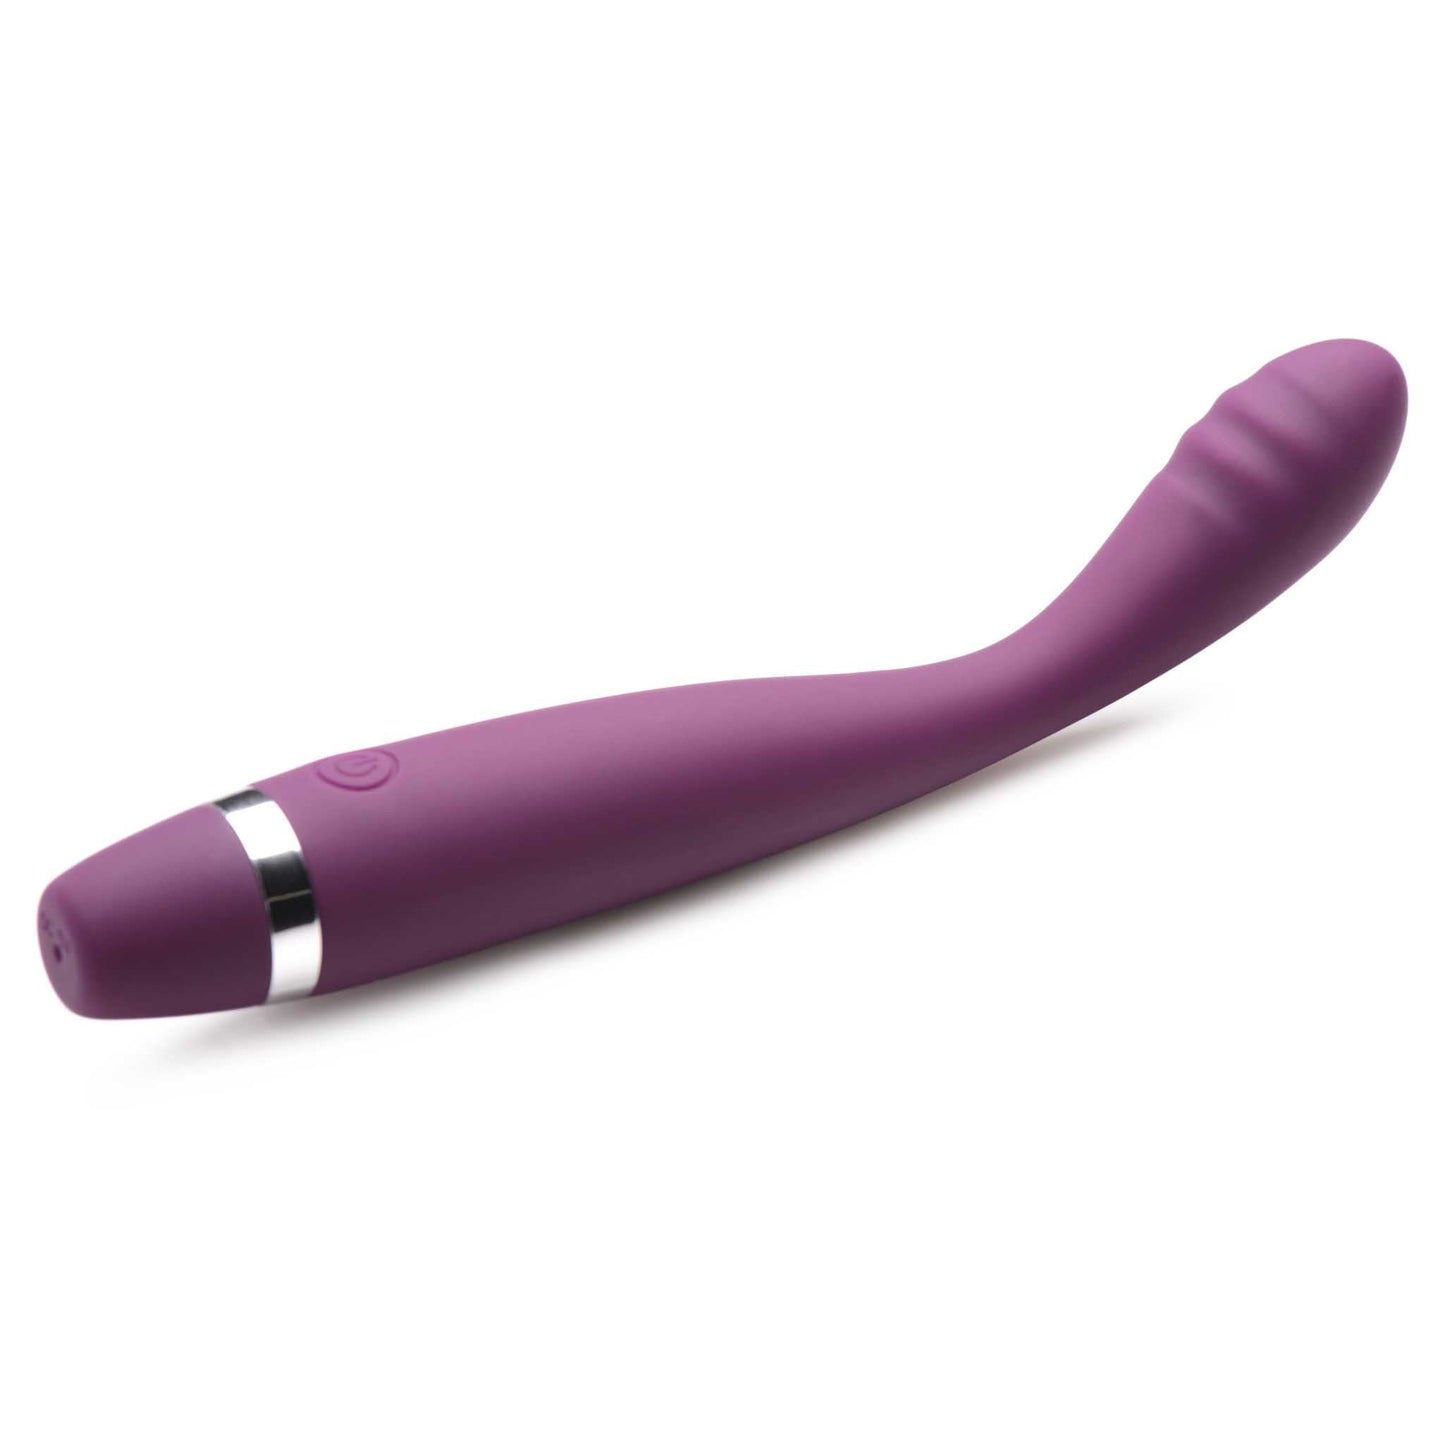 Inmi Flexible Pinpoint Silicone Vibrator - Purple